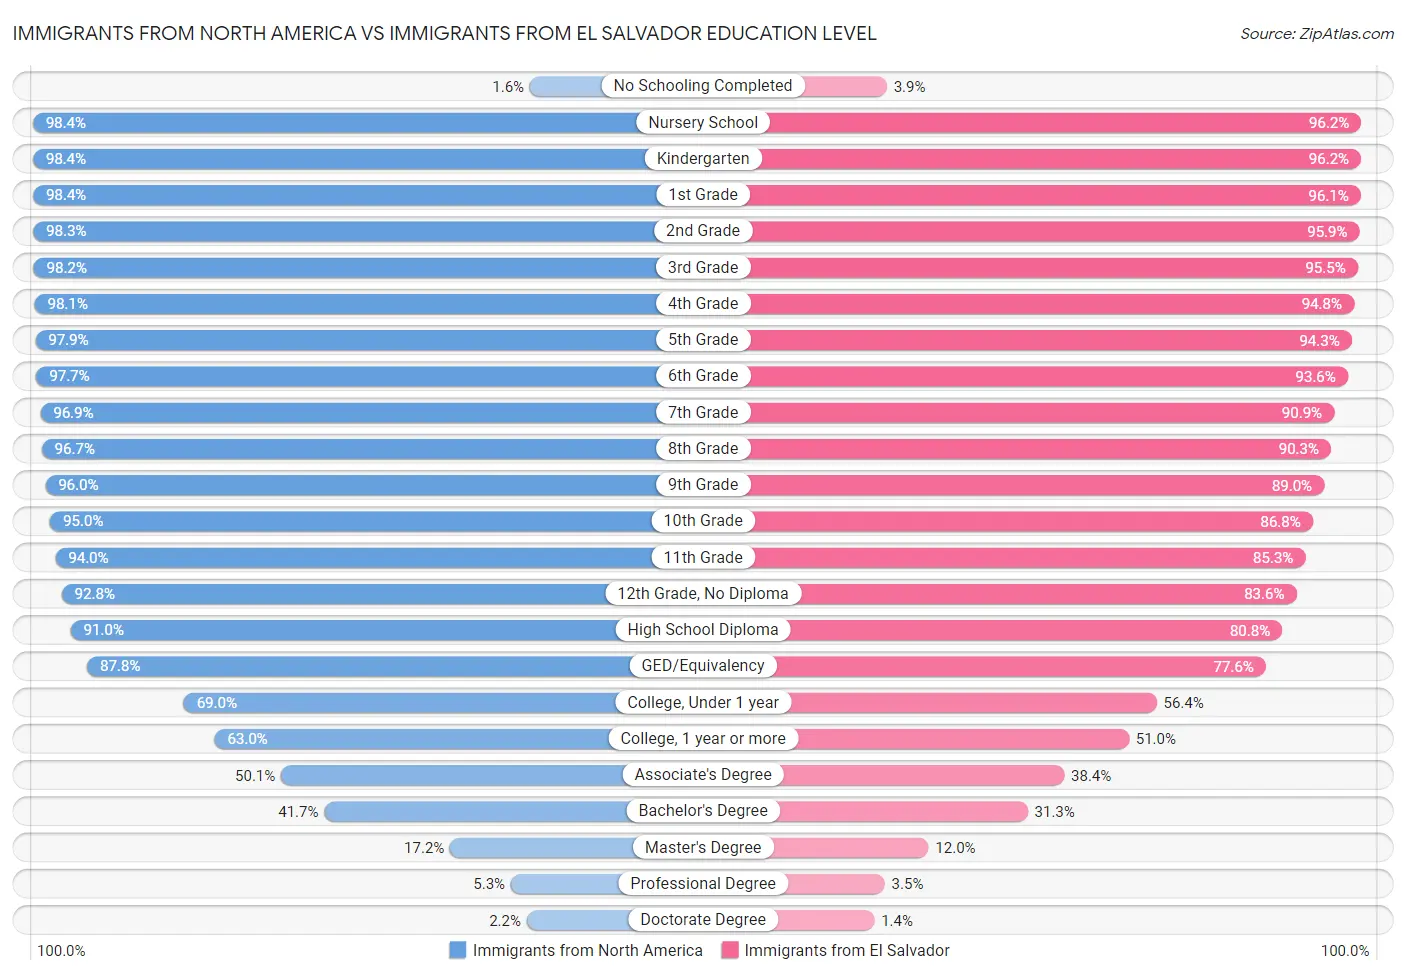 Immigrants from North America vs Immigrants from El Salvador Education Level